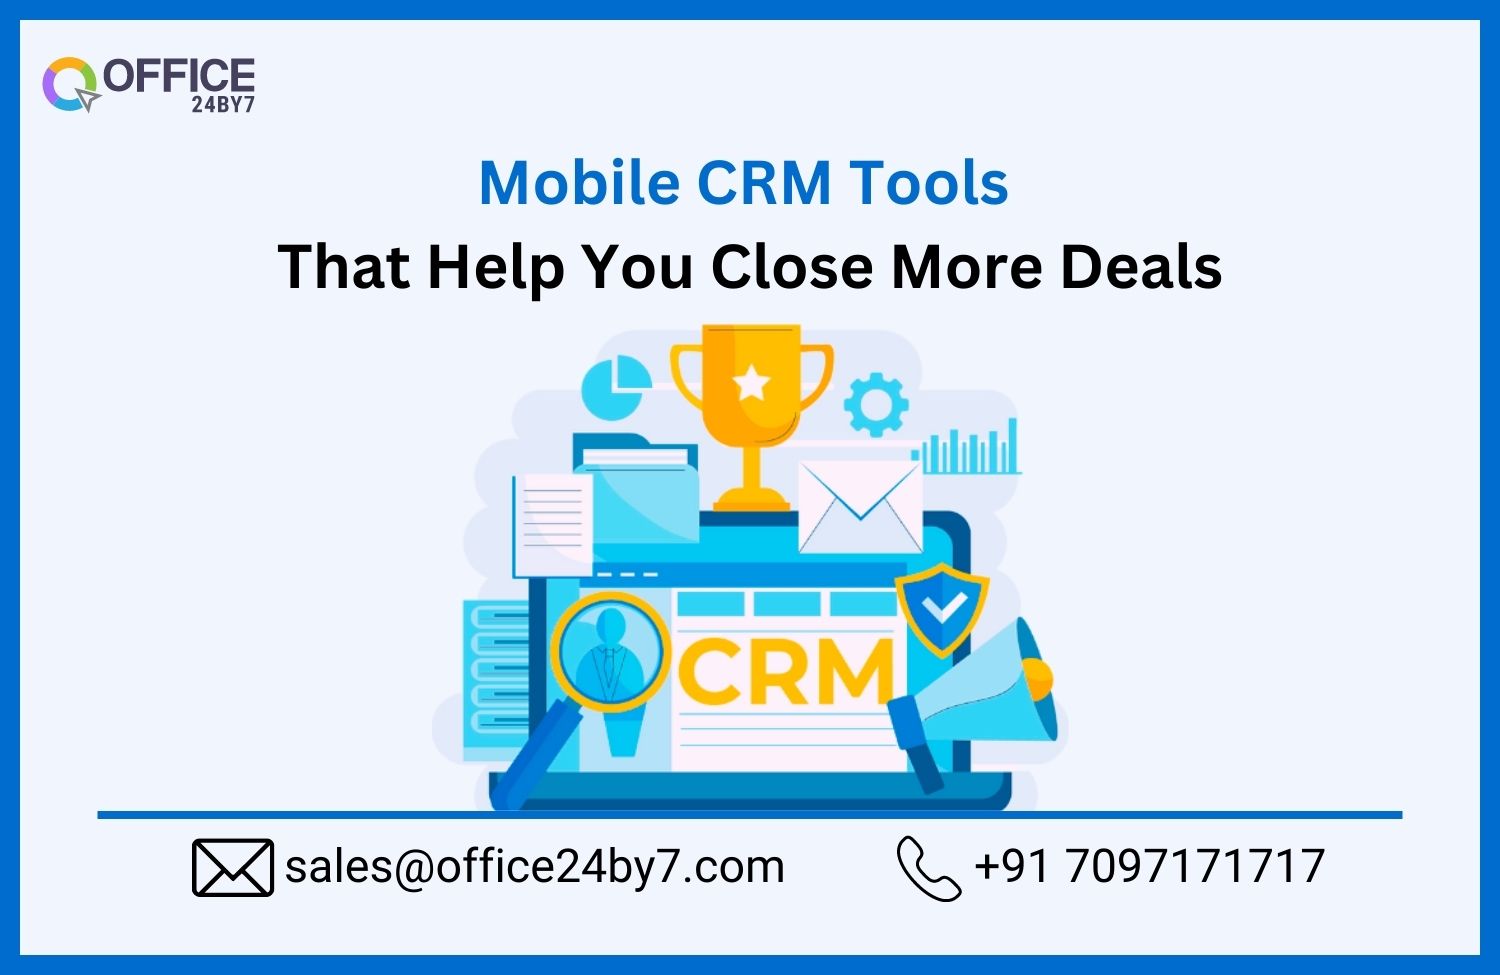 Mobile CRM Tools That Help You Close More Deals